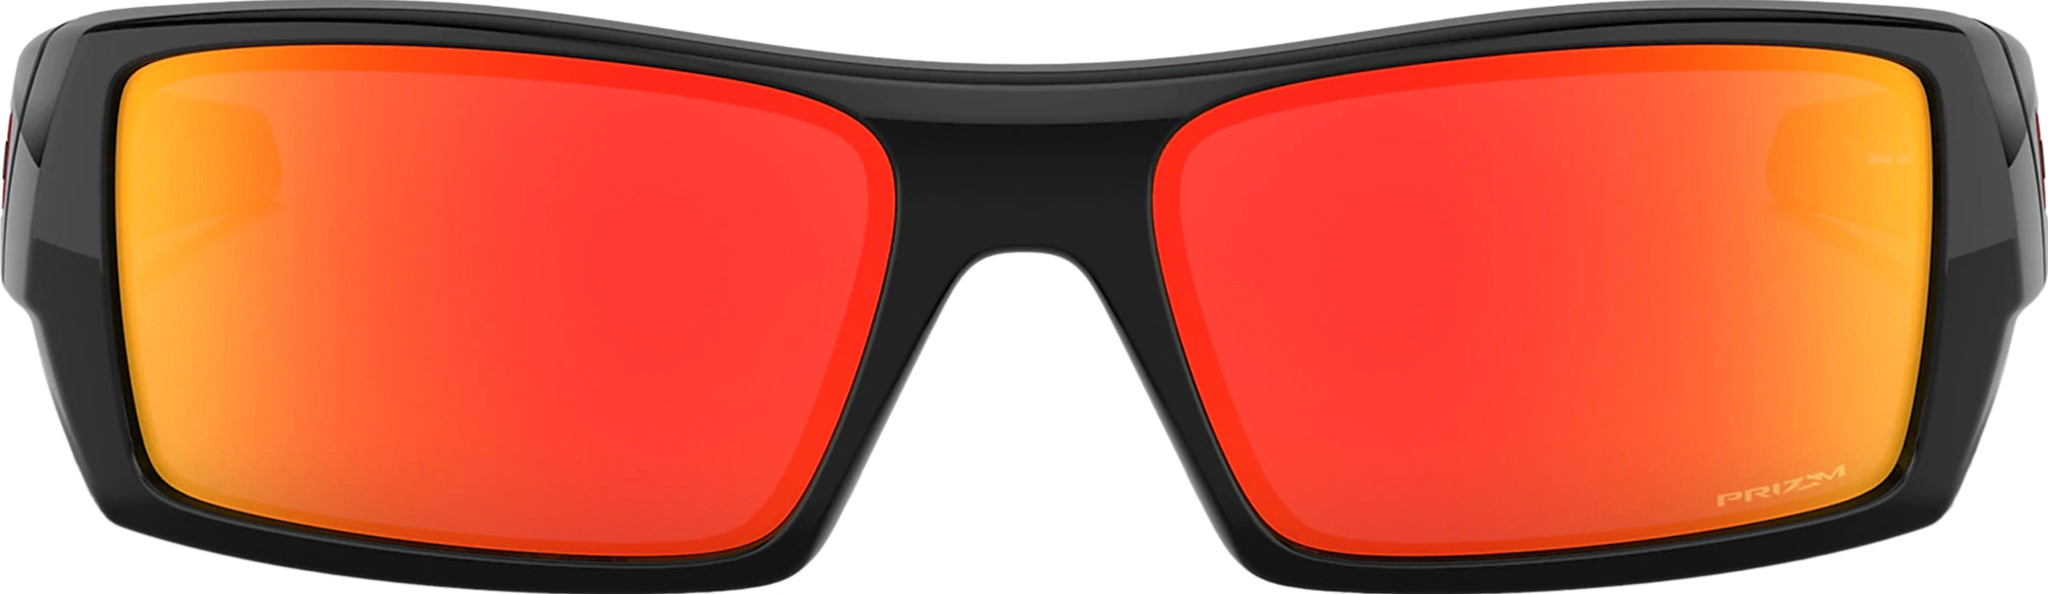 Oakley Gascan Sunglasses - Polished Black - Prizm Ruby Iridium Lens |  Altitude Sports